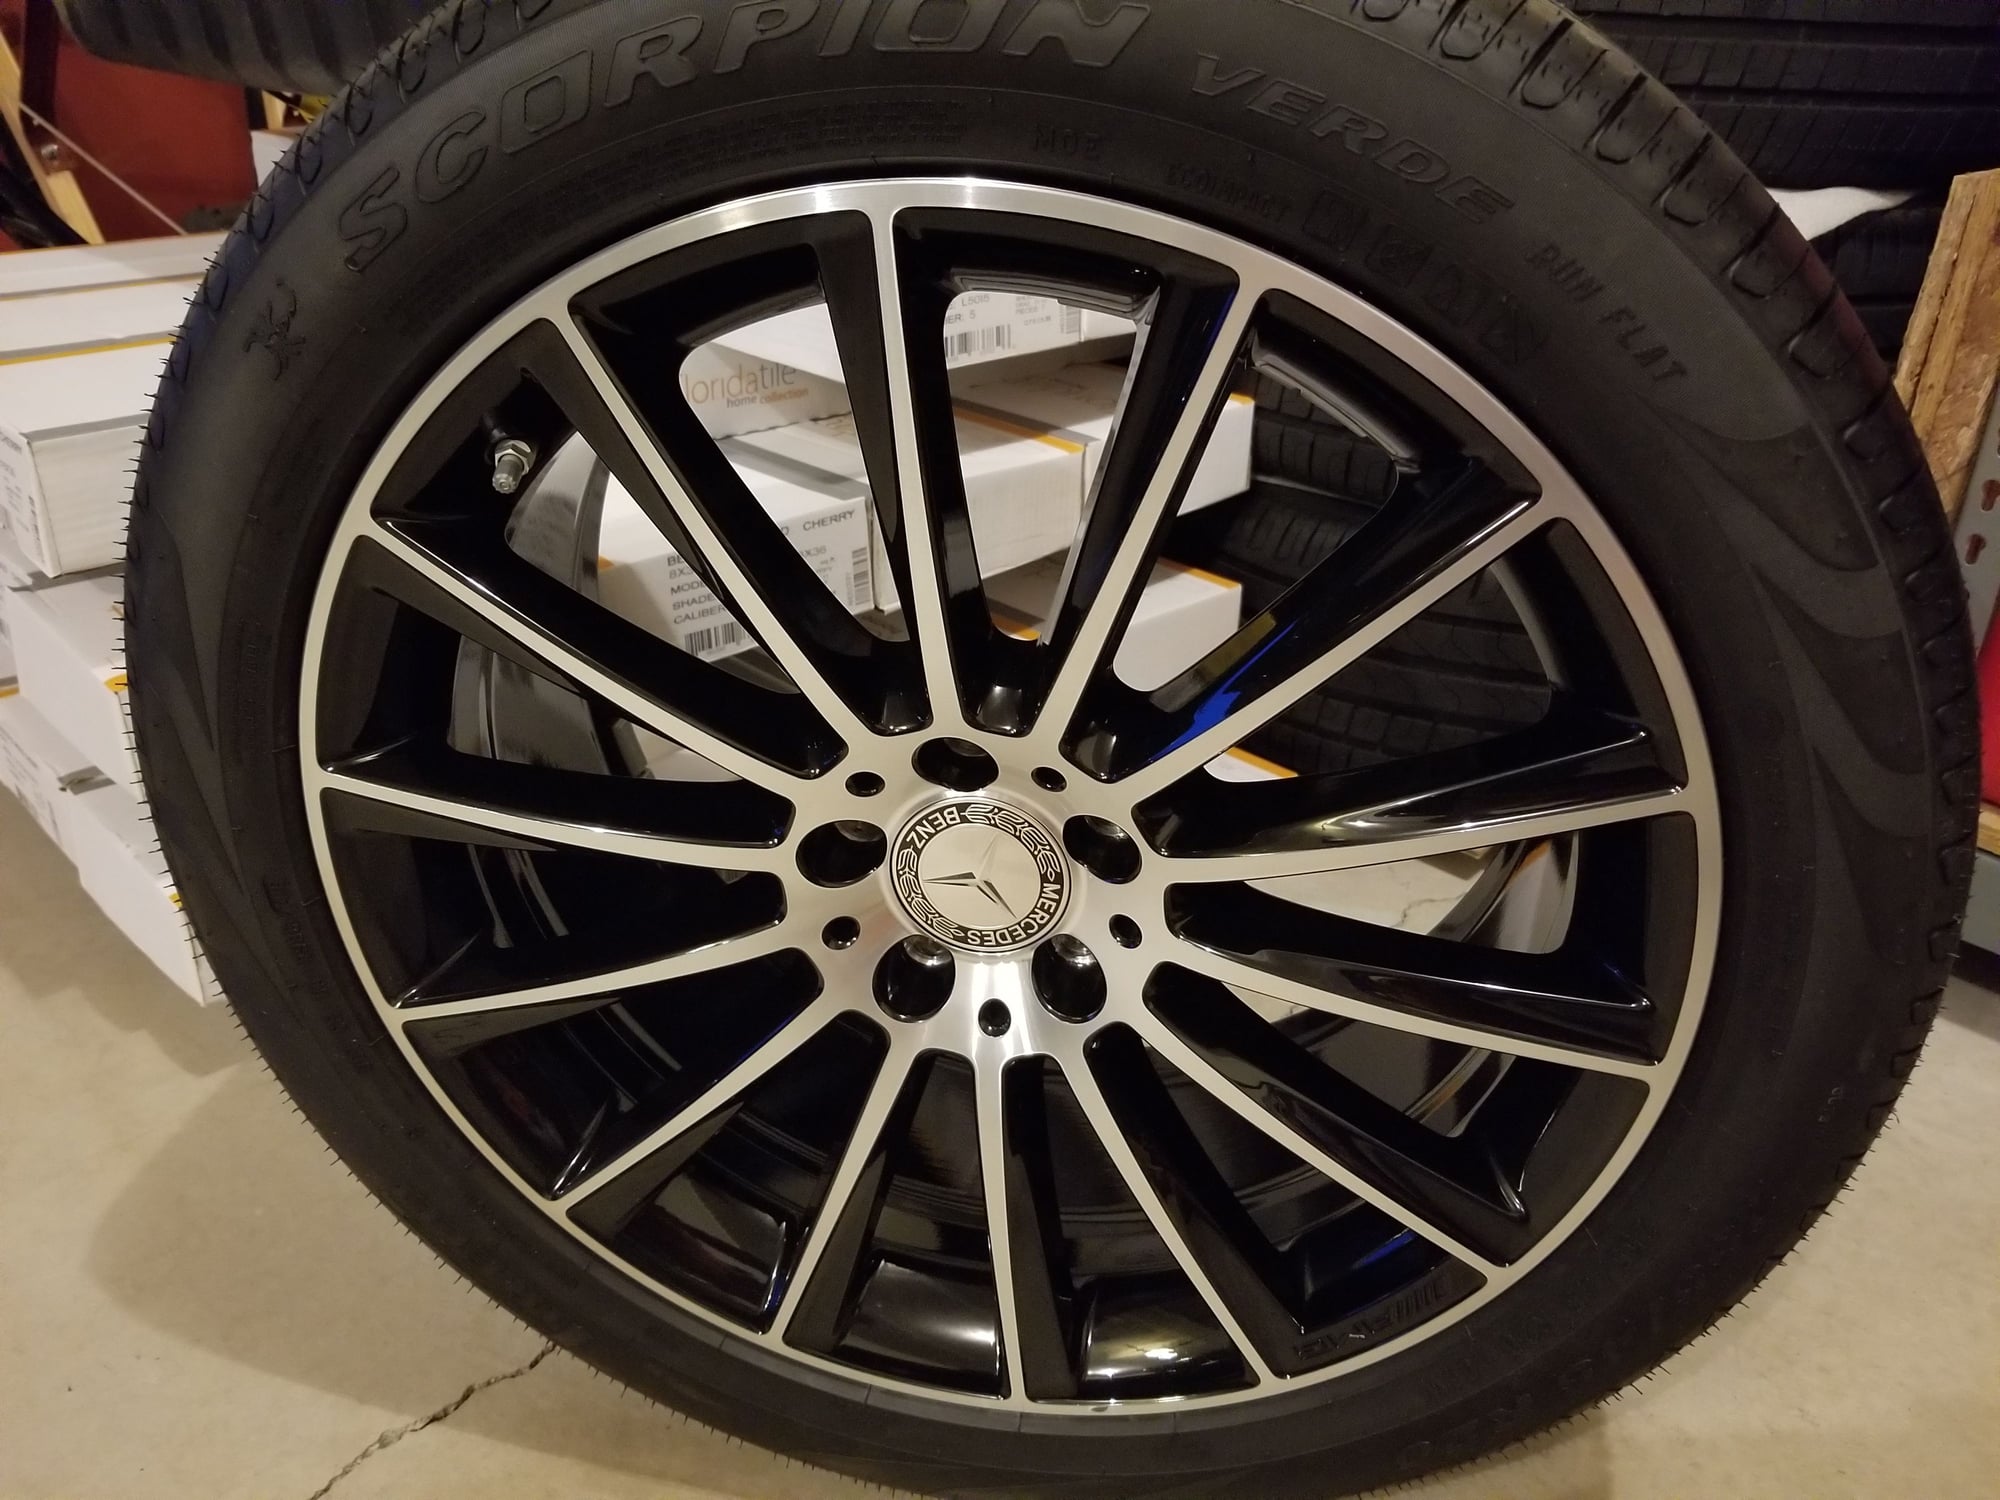 Wheels and Tires/Axles - FS-Brand New AMG 20 in. Multi-Spoke Wheels/Pirelli Scorpion Verde Run Flat Tires - New - All Years Mercedes-Benz All Models - Anoka, MN 55303, United States